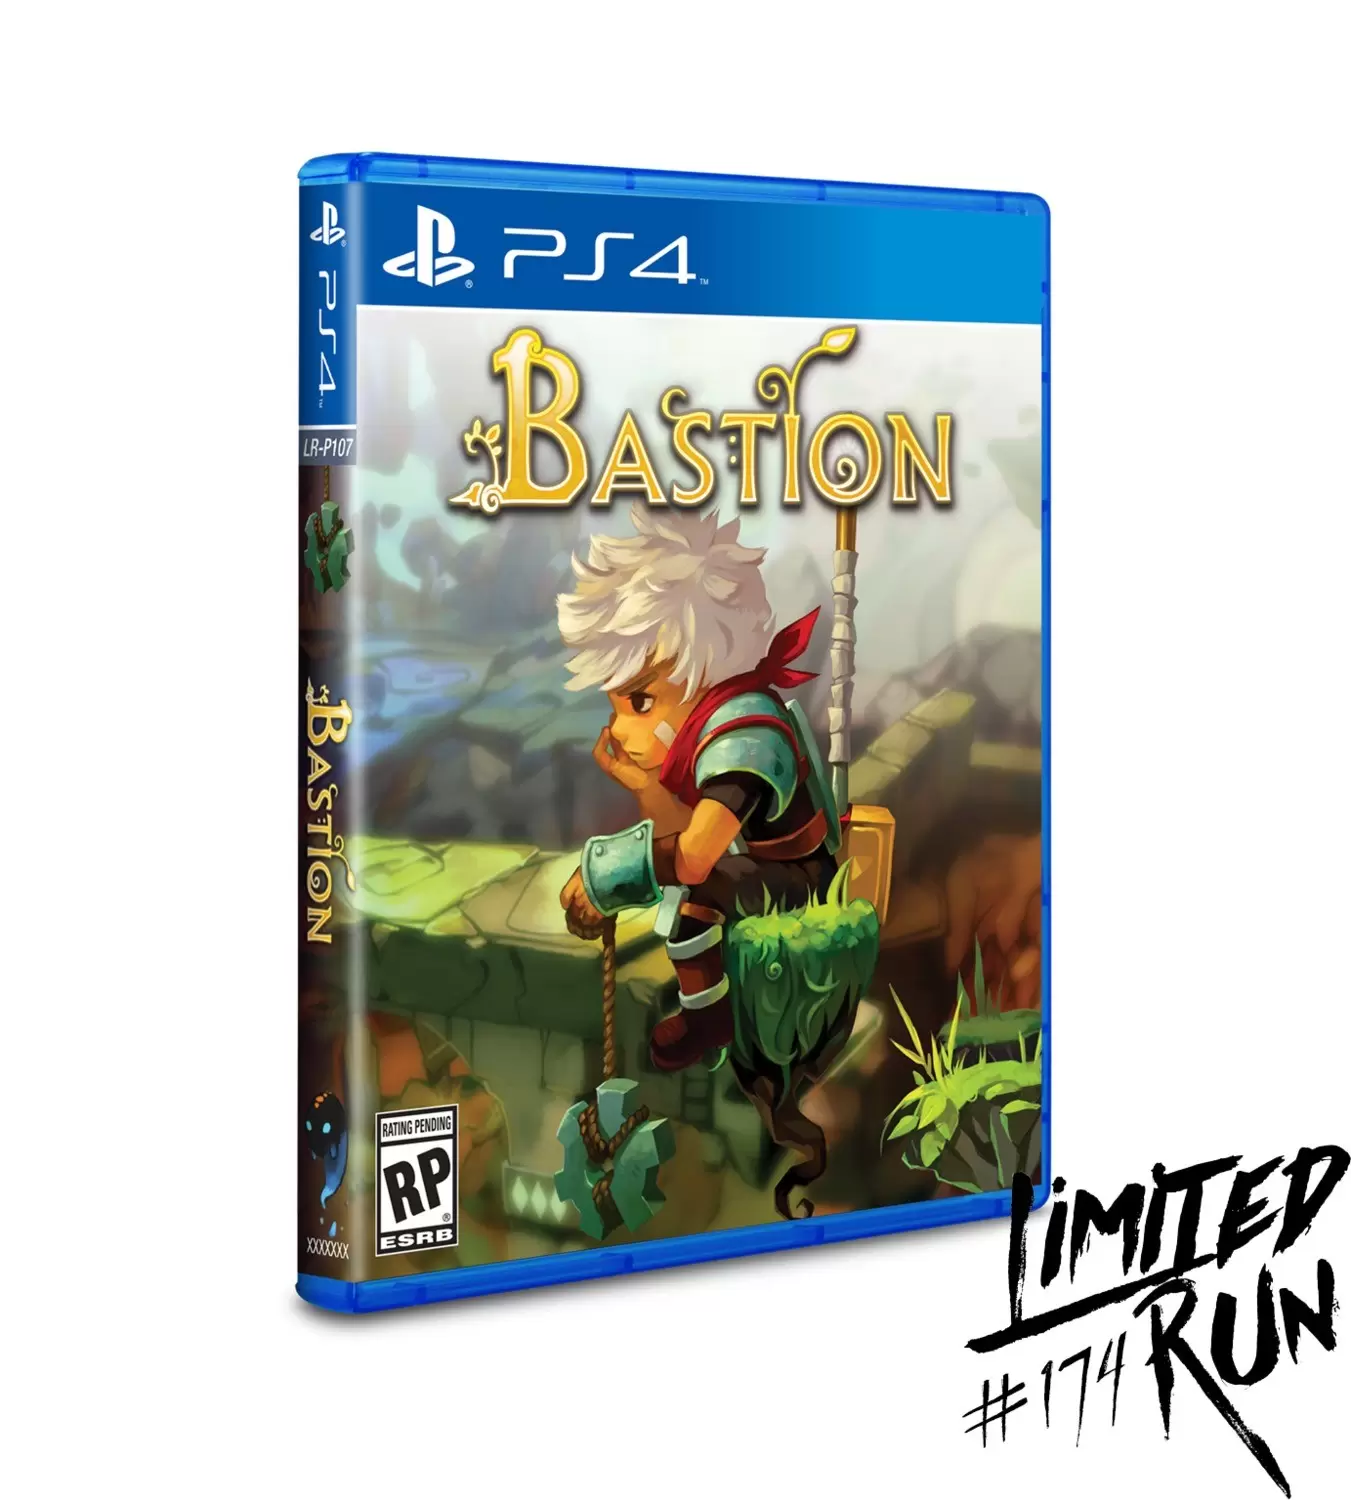 PS4 Games - Bastion